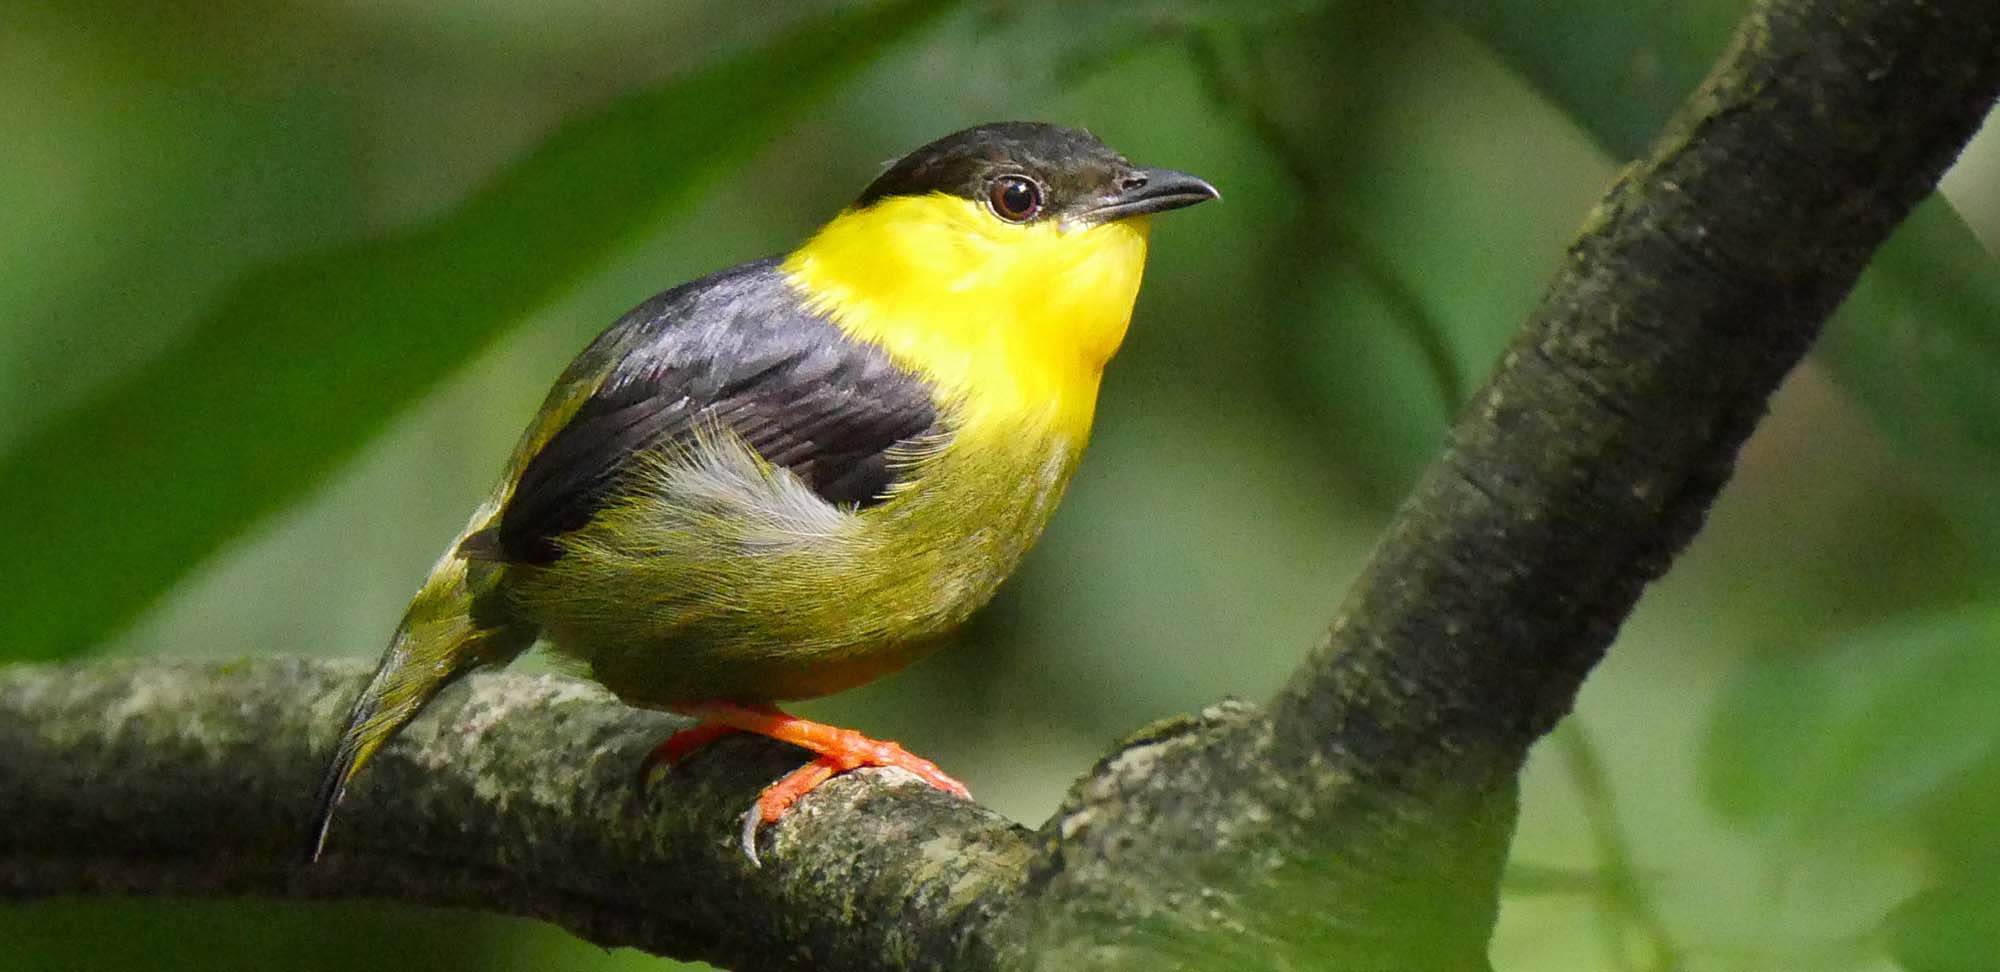 Golden-collared Manakin Field Guides Birding Tours Panama